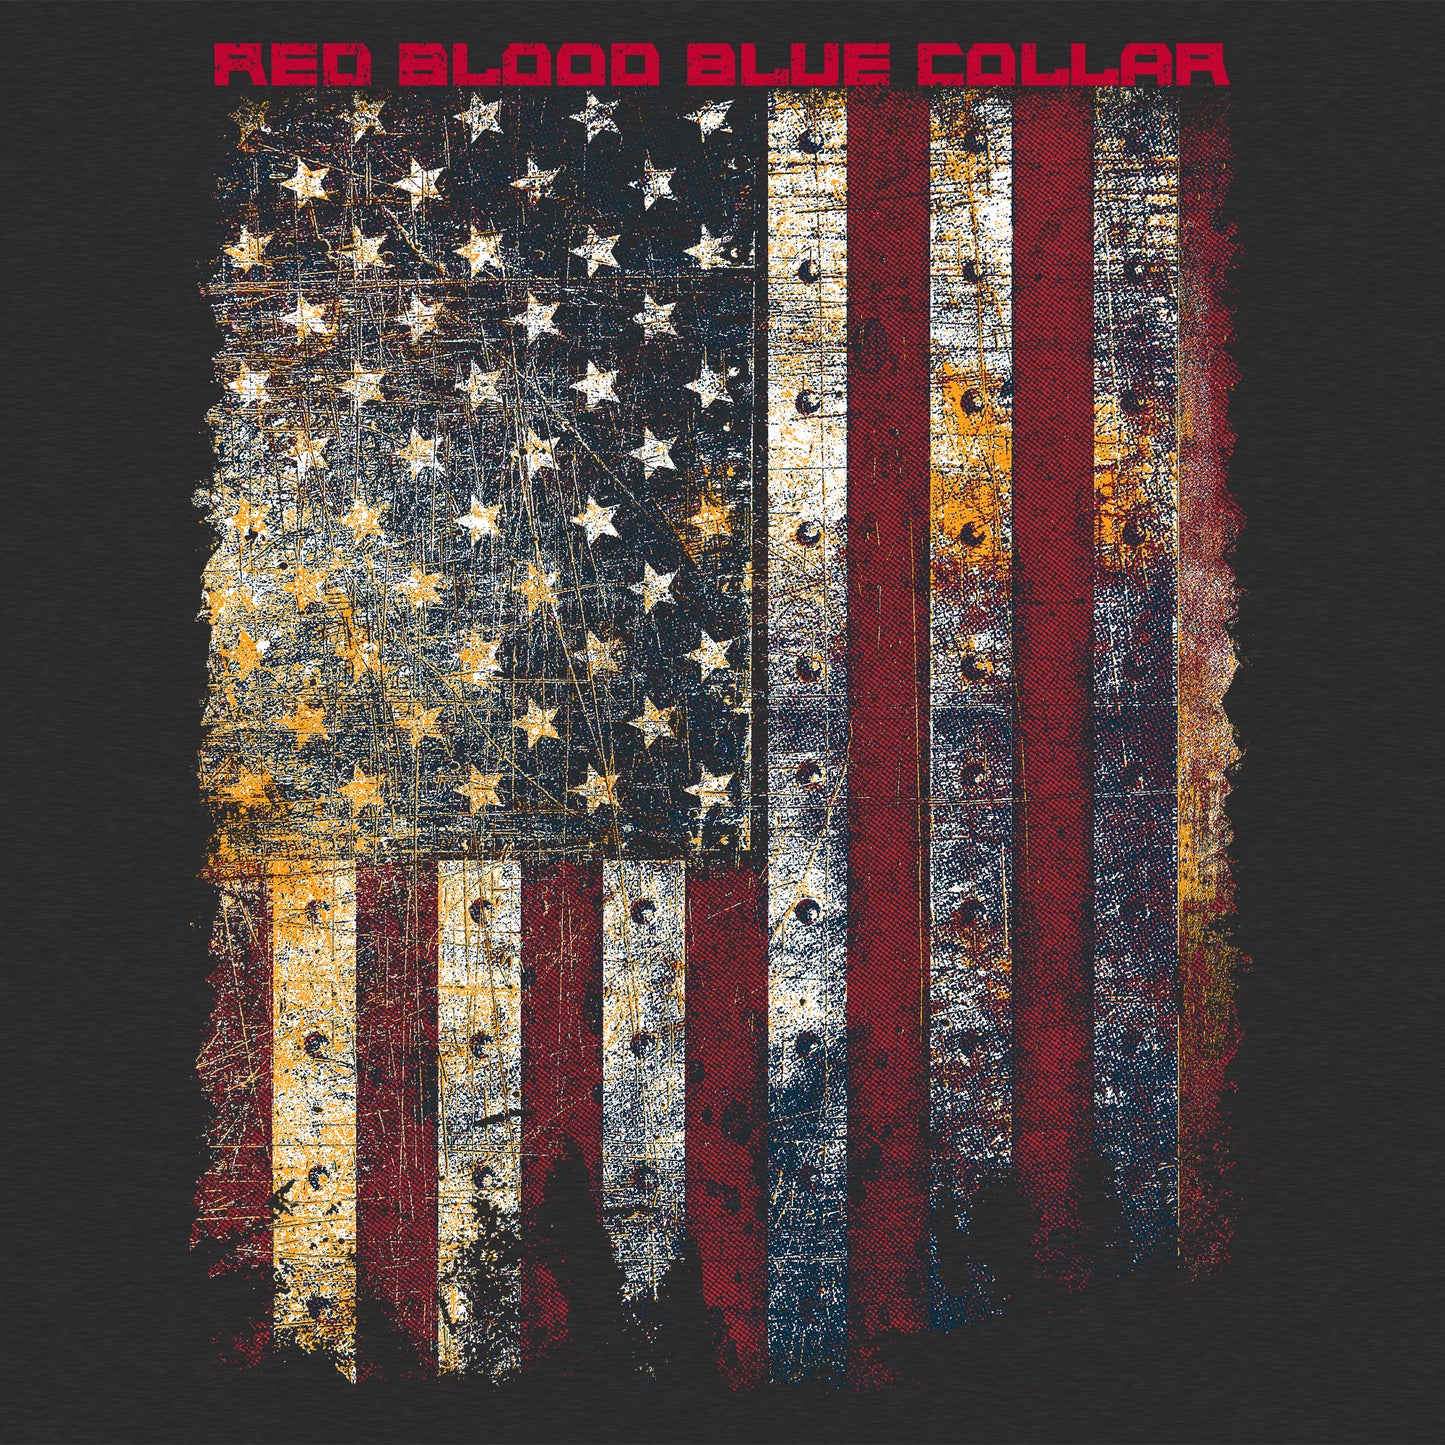 Patriotic Shirt - Red Blood Blue Collar - American Flag 